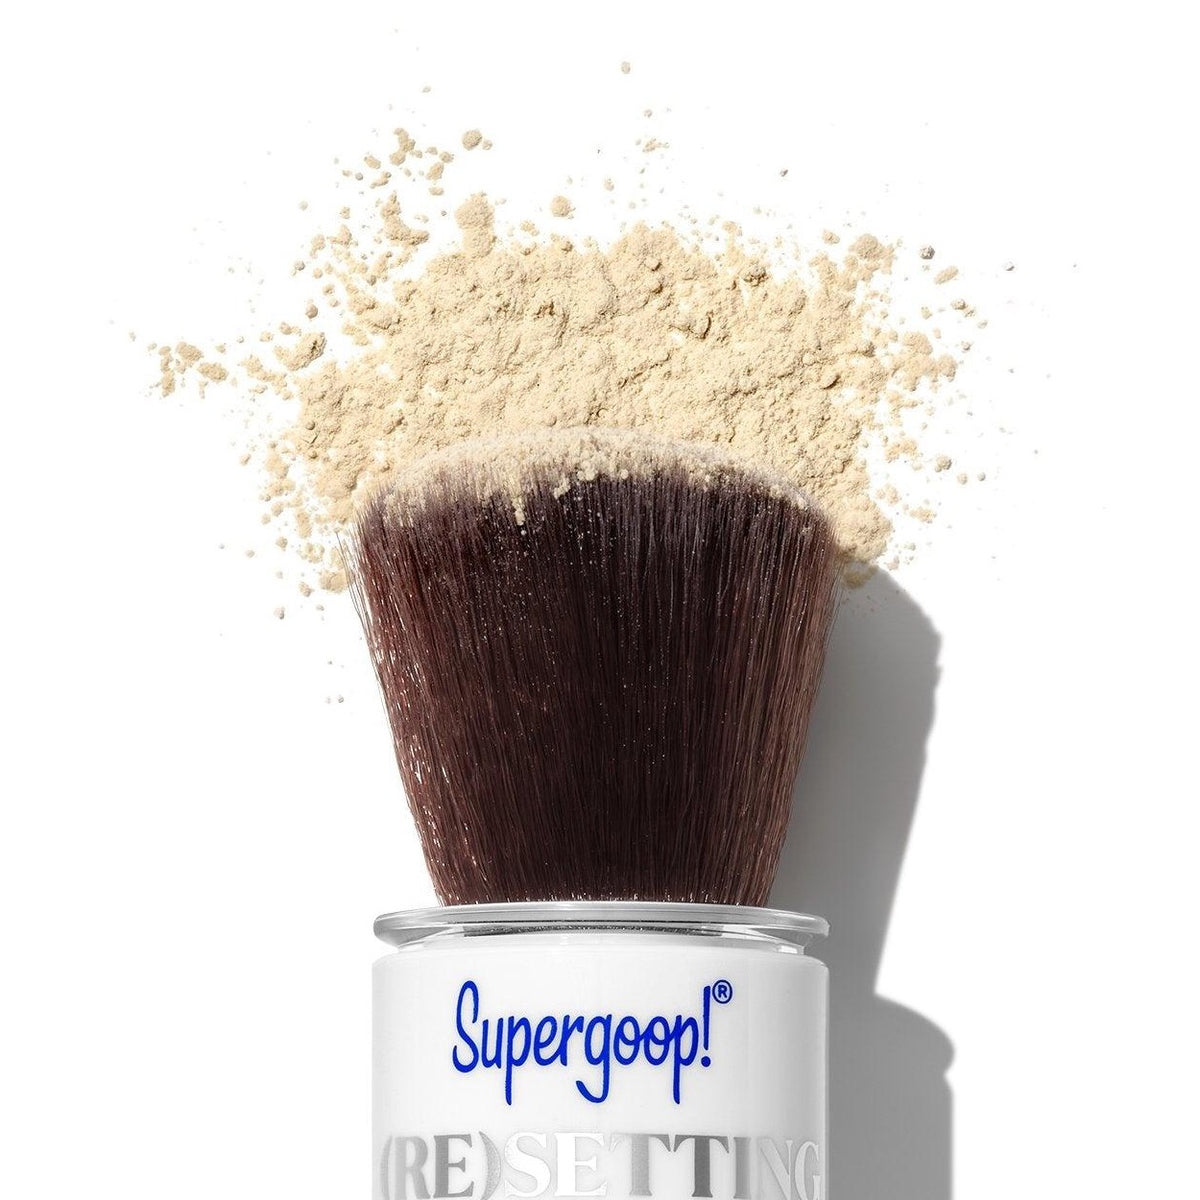 (Re)setting 100% Mineral Powder SPF 35